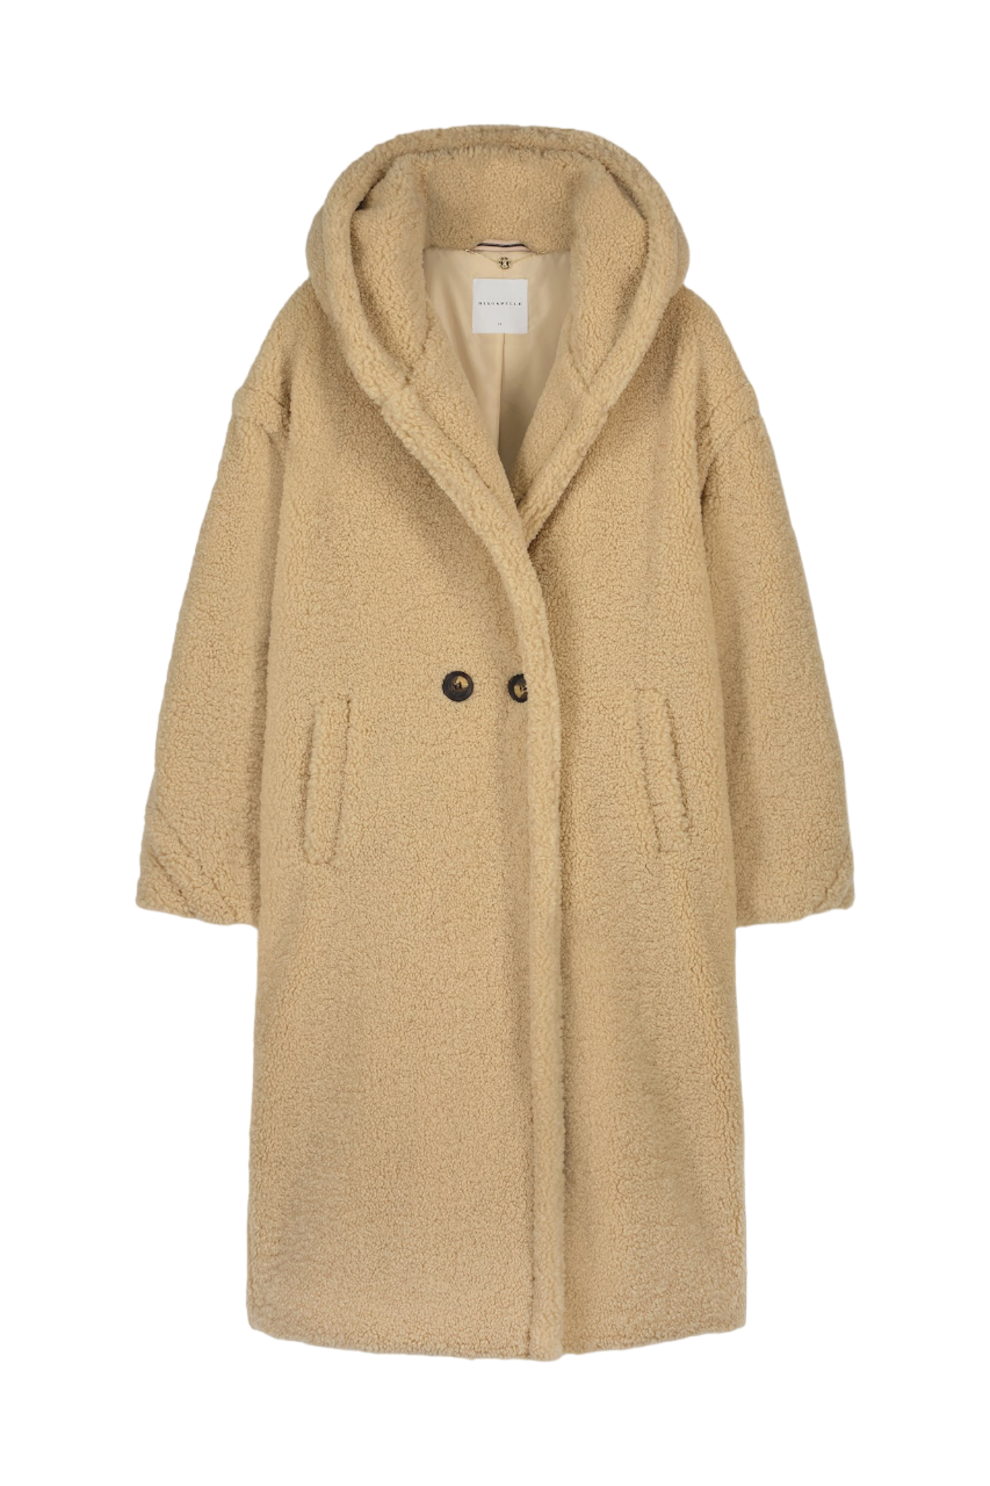 Rino & Pelle Lasta.7002210 Long hooded double breasted coat